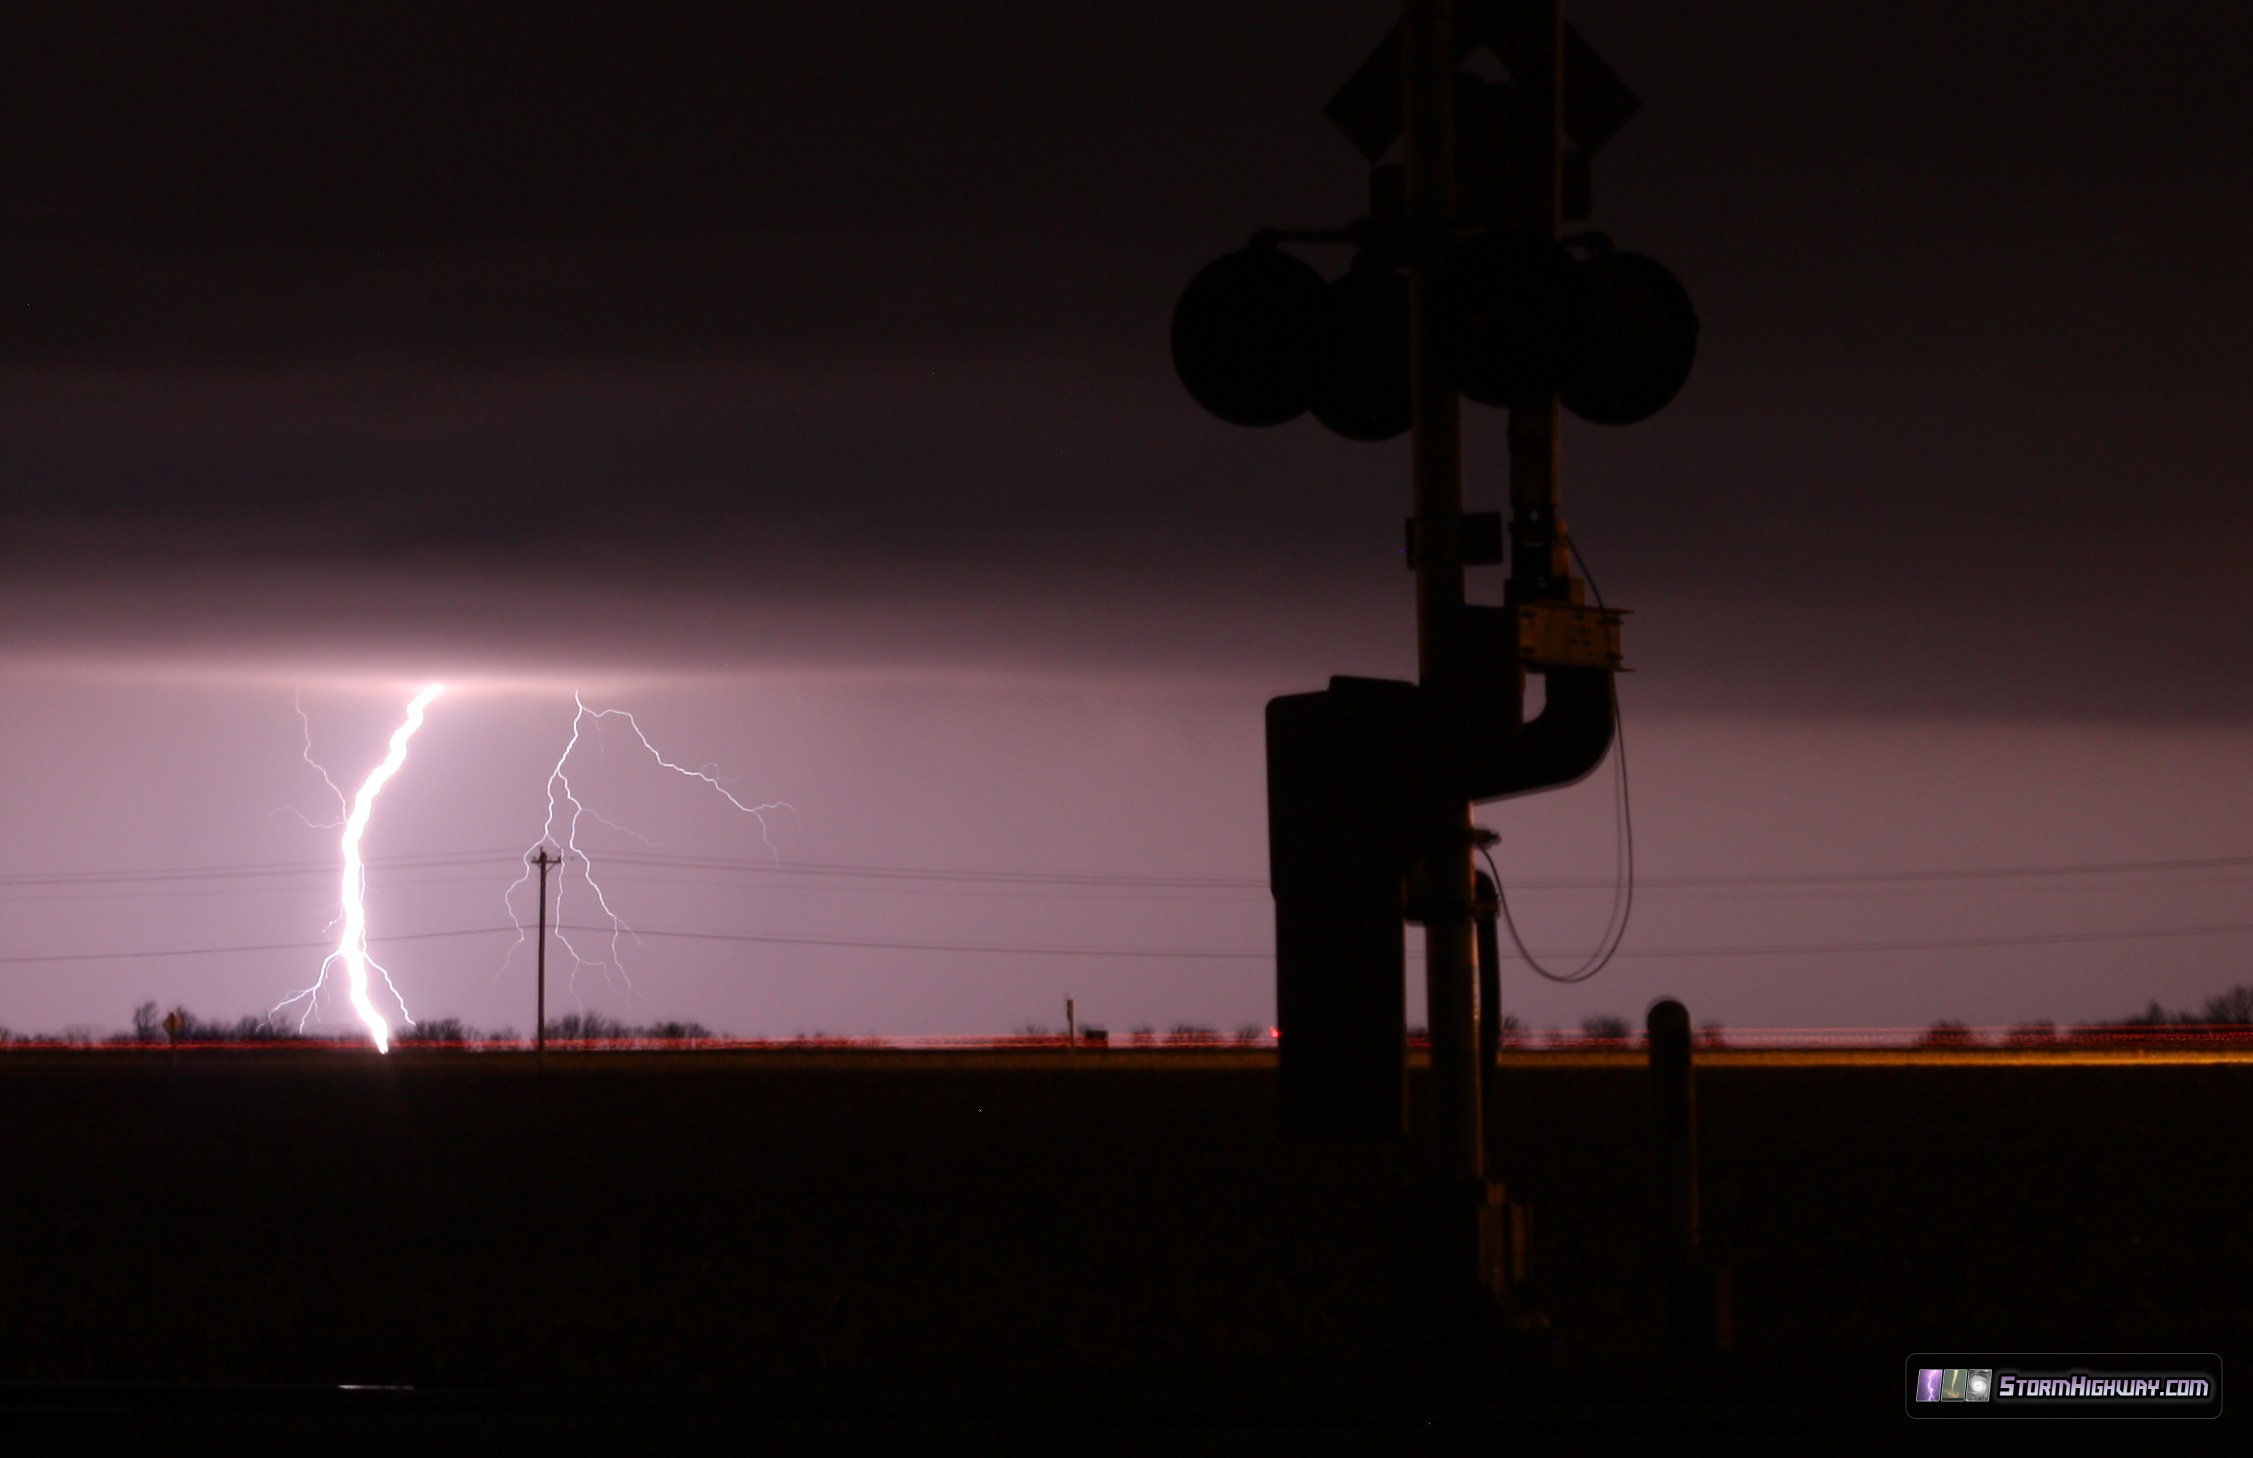 Lightning at New Baden, IL - March 27, 2014